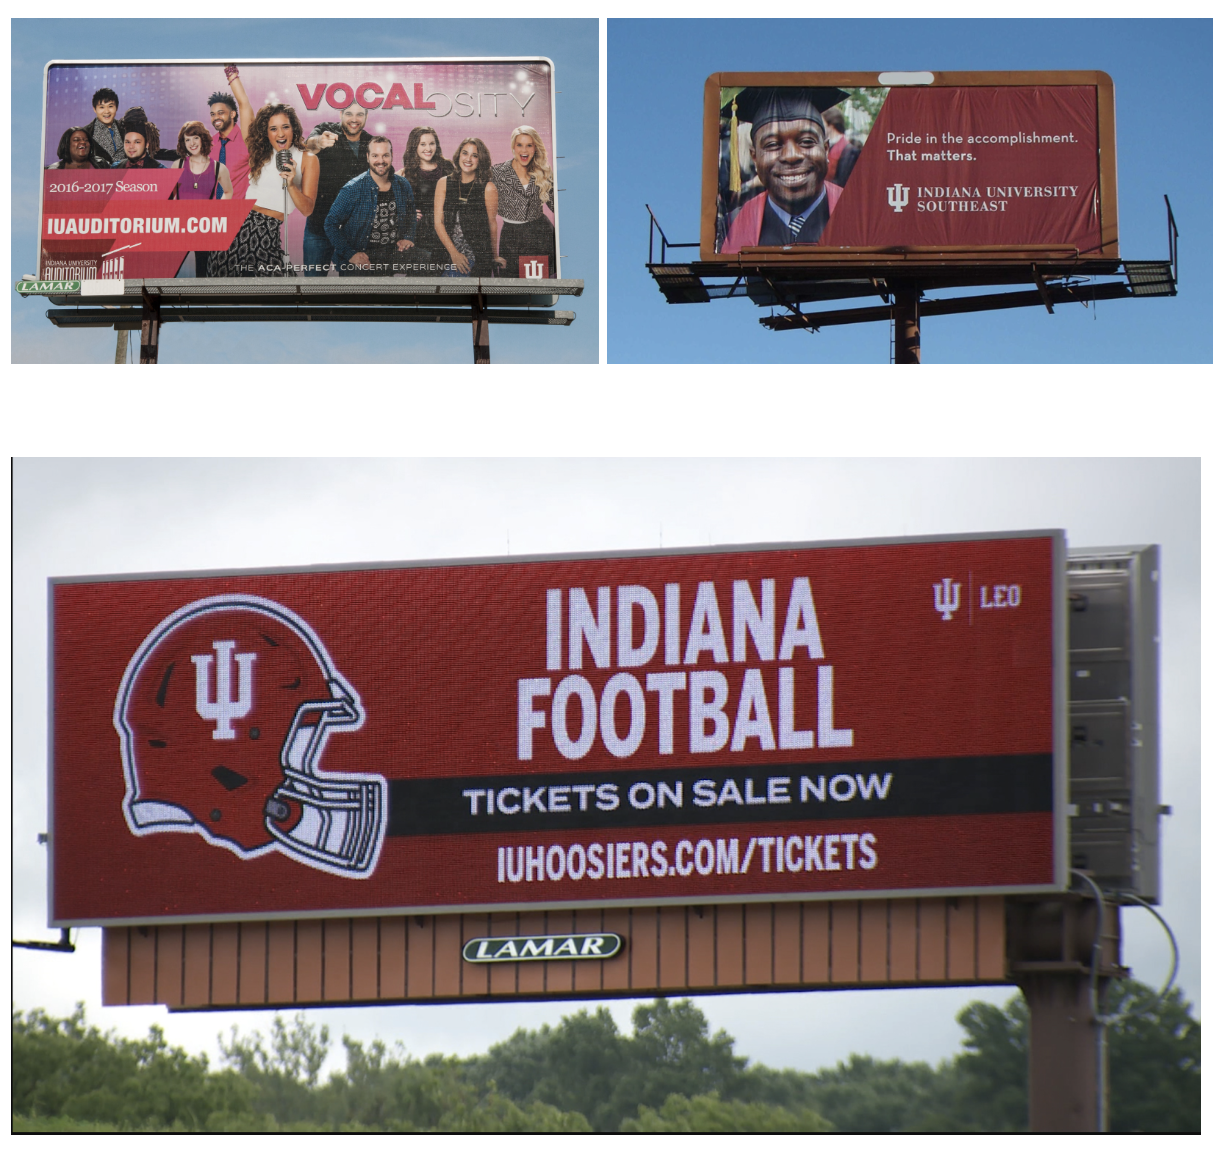 examples of IU billboard advertisements